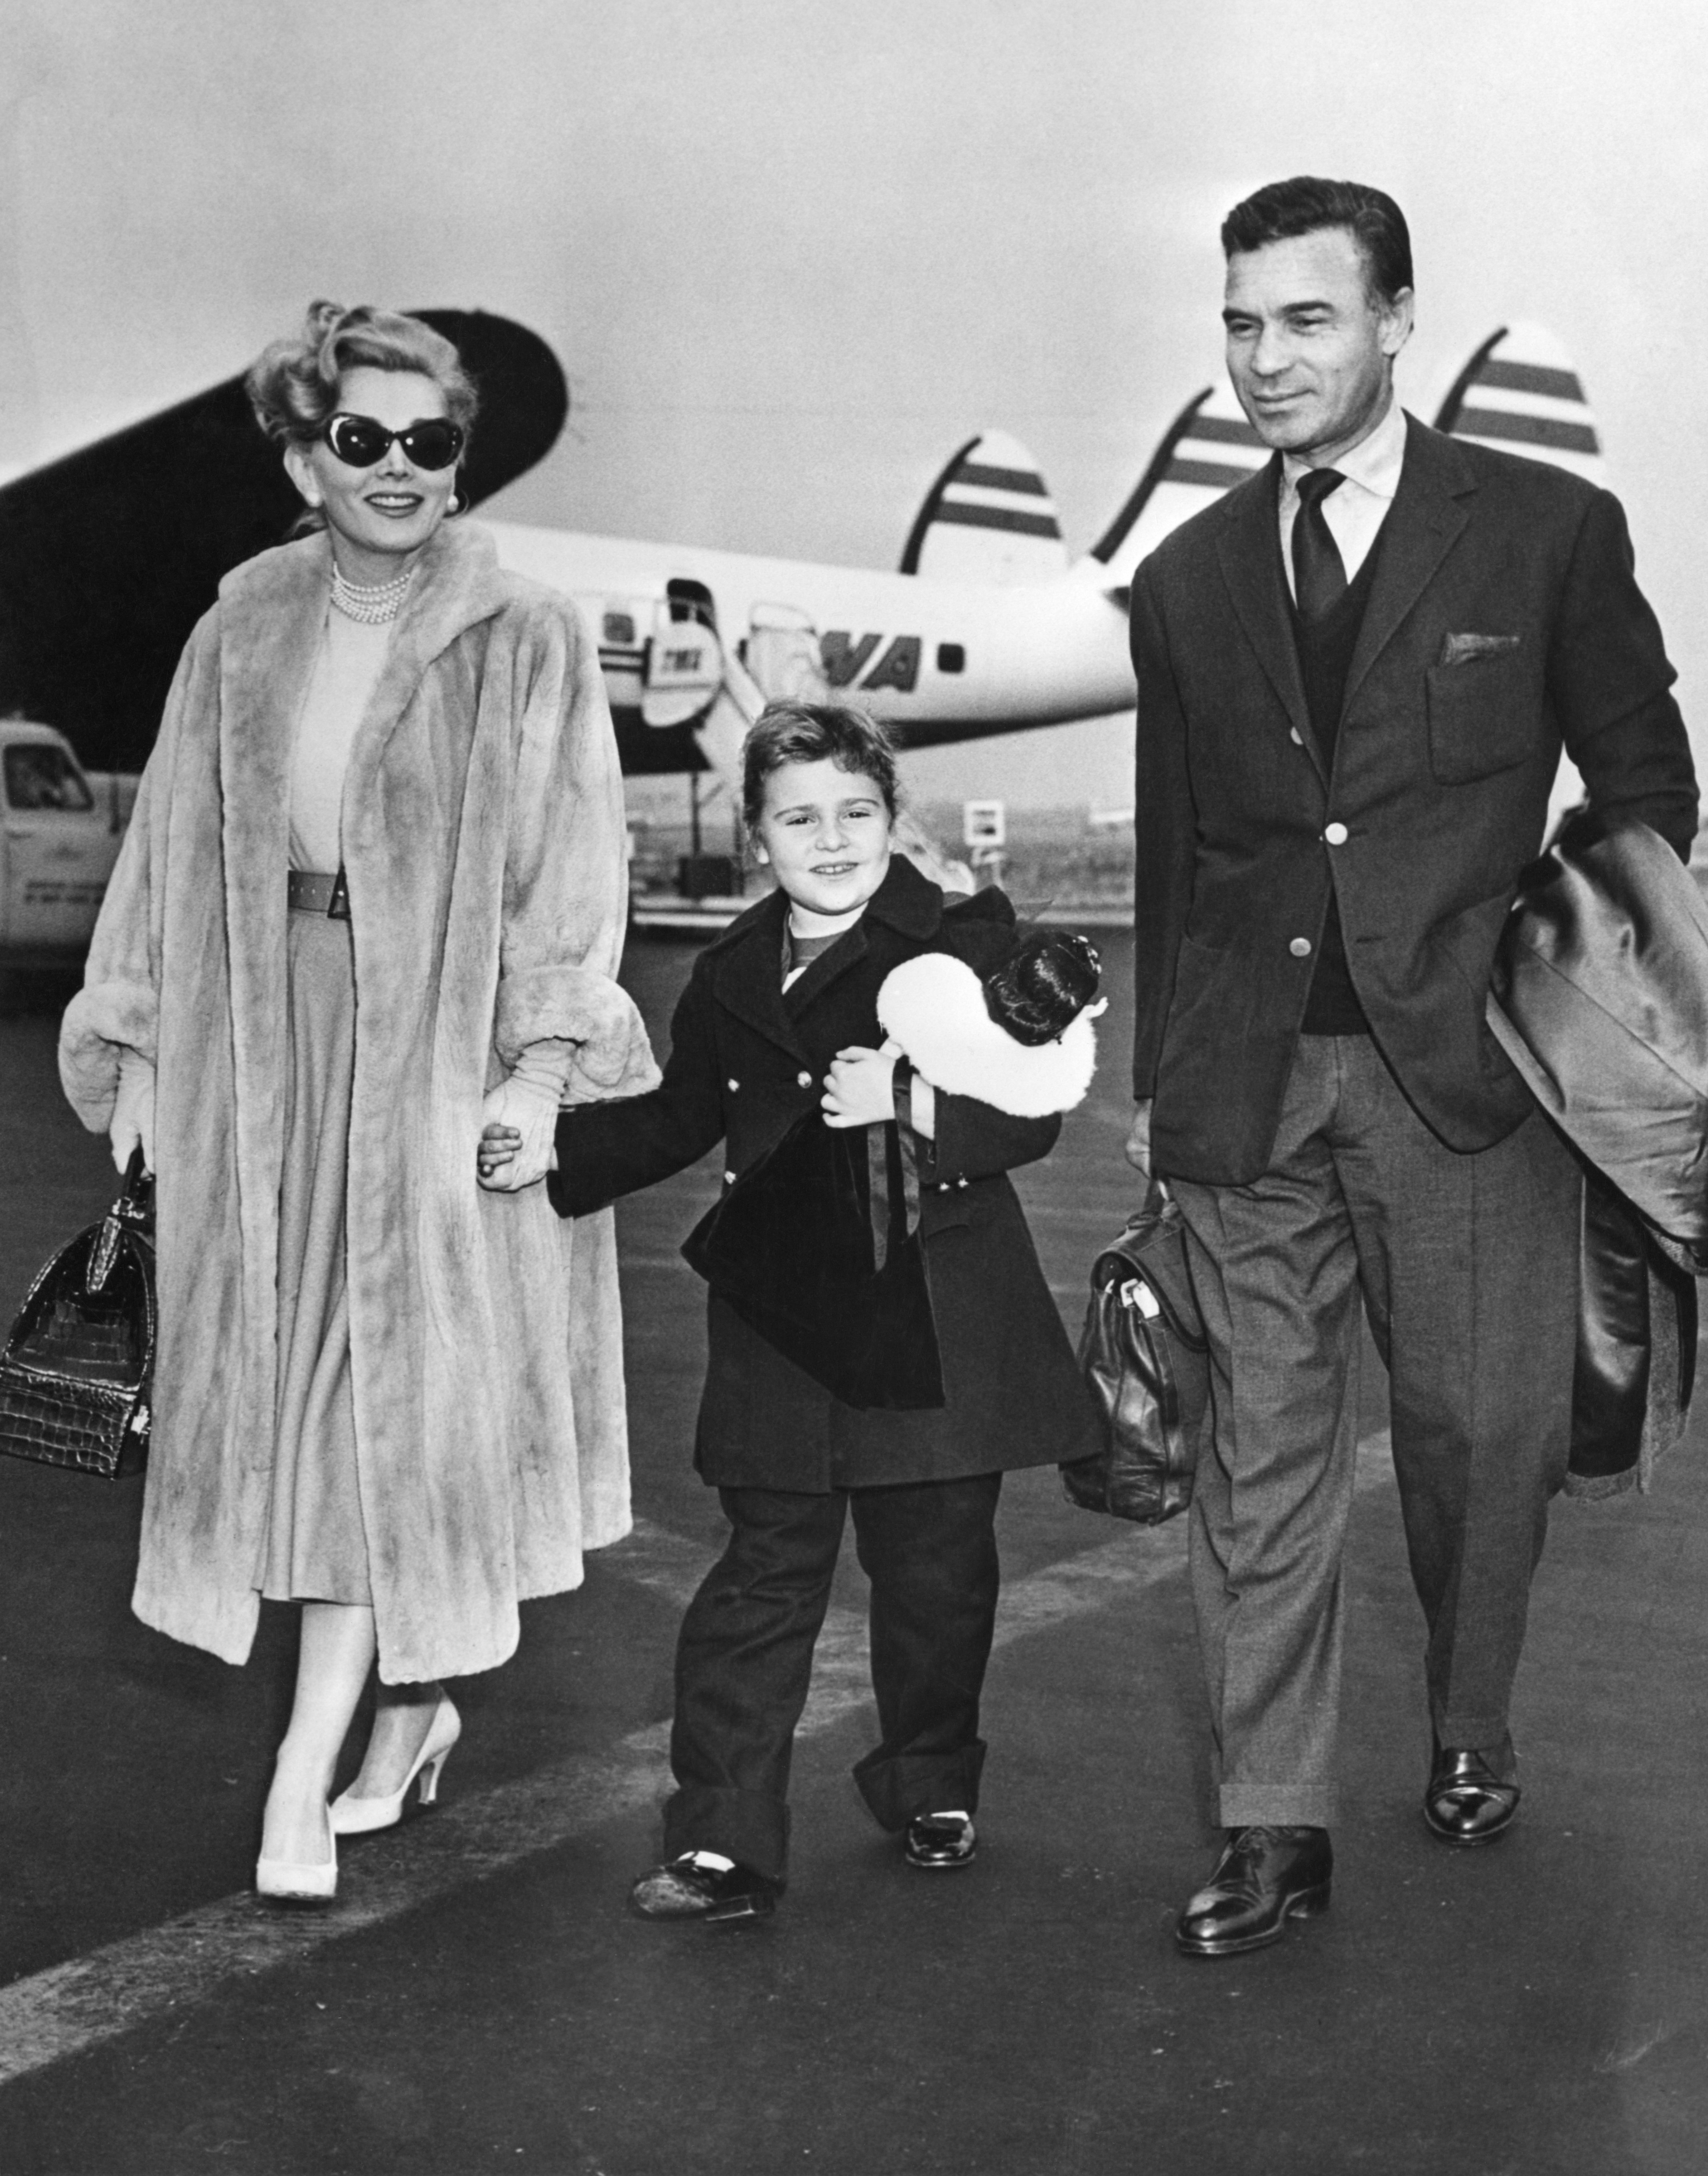 Zsa Zsa Gabor, Francesca Hilton, and Porforio Rubirosa at Idlewild Airport on December 31, 1954. | Source: Bettmann/Getty Images